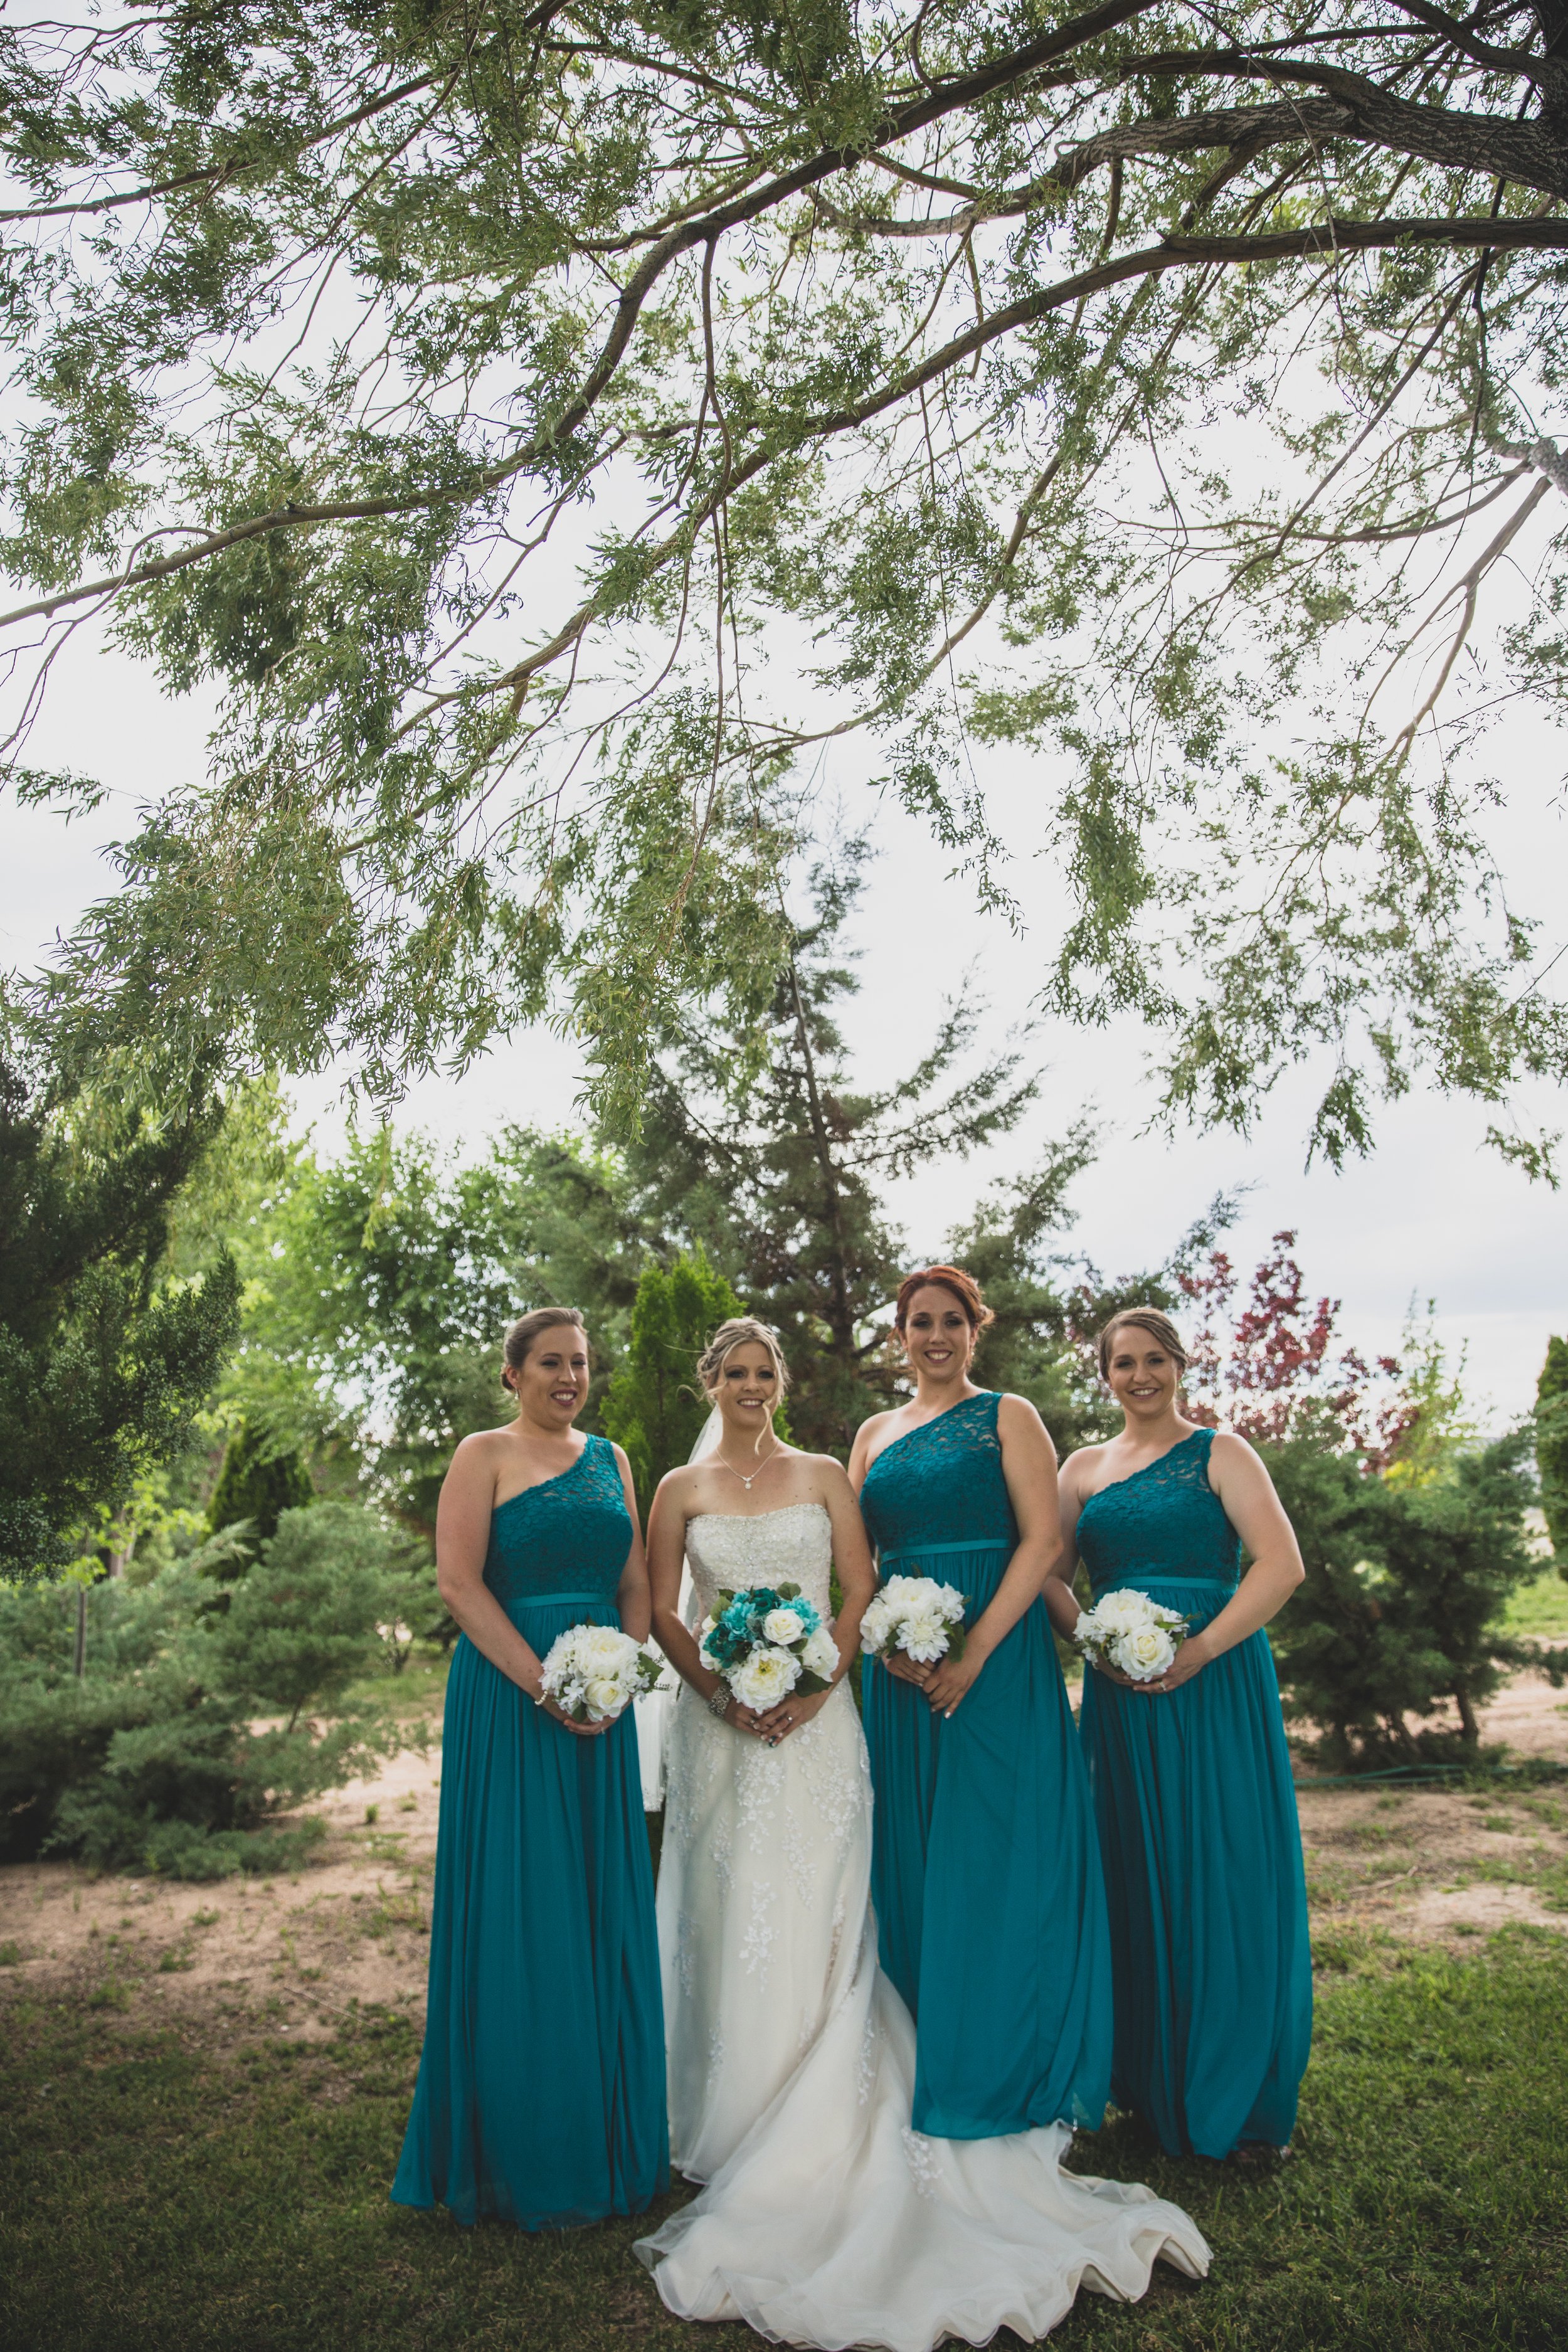  Teal Dresses and Bridal party at Arizona wedding by Northern Arizona Wedding Photographer, Jennifer Lind Schutsky.  